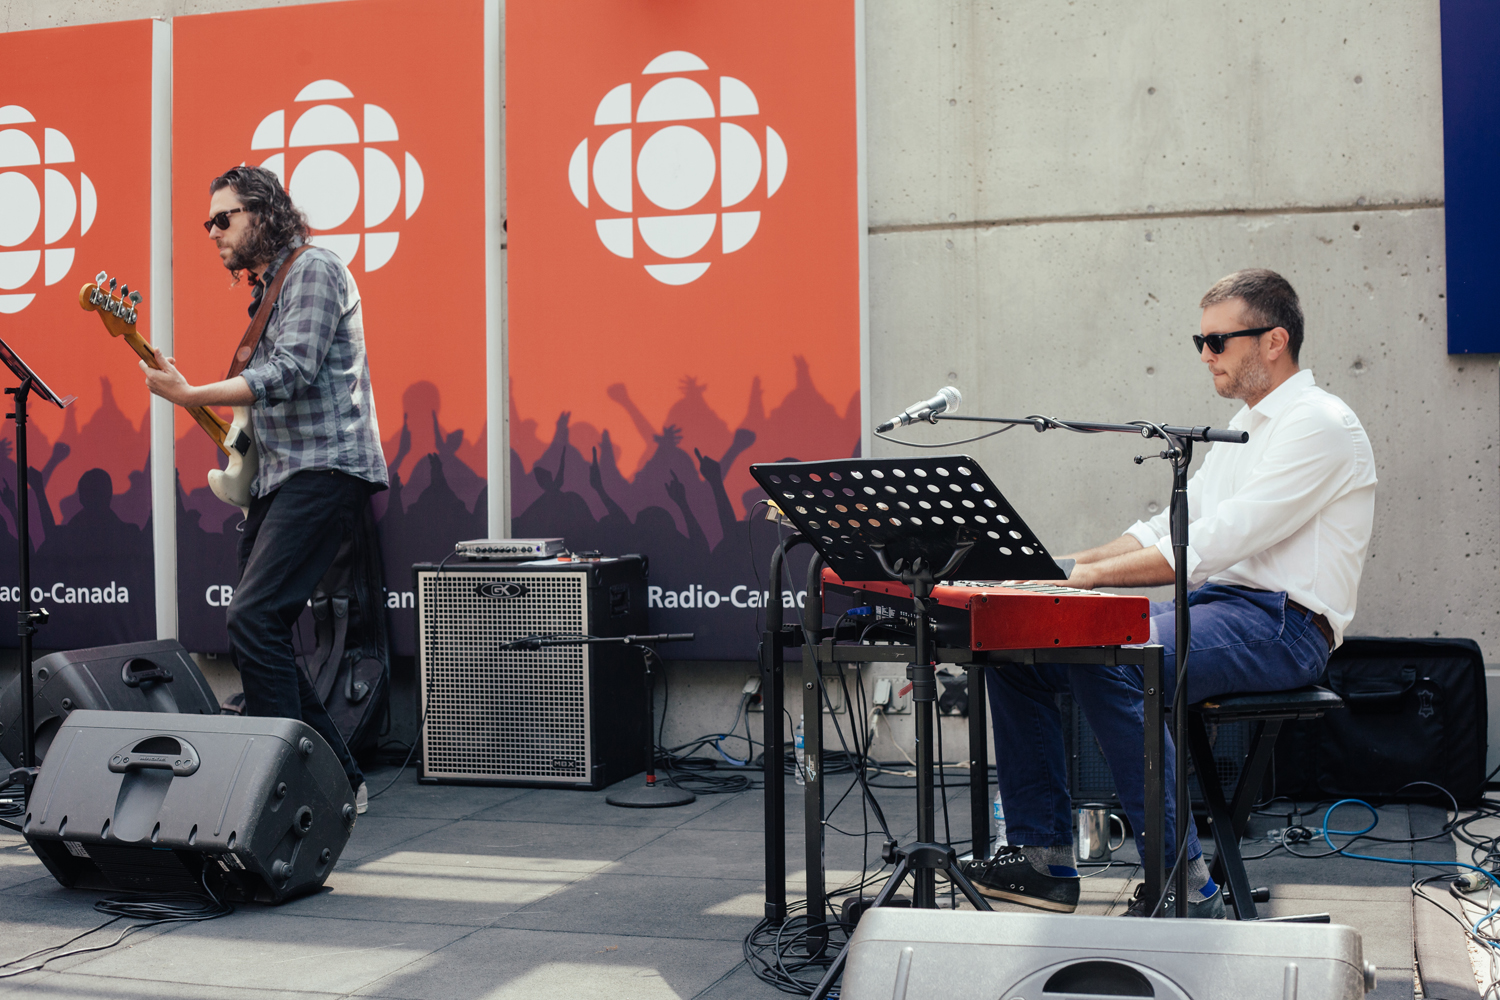   Dawn Pemberton, Musical Nooner @ CBC Christine McAvoy Photo  